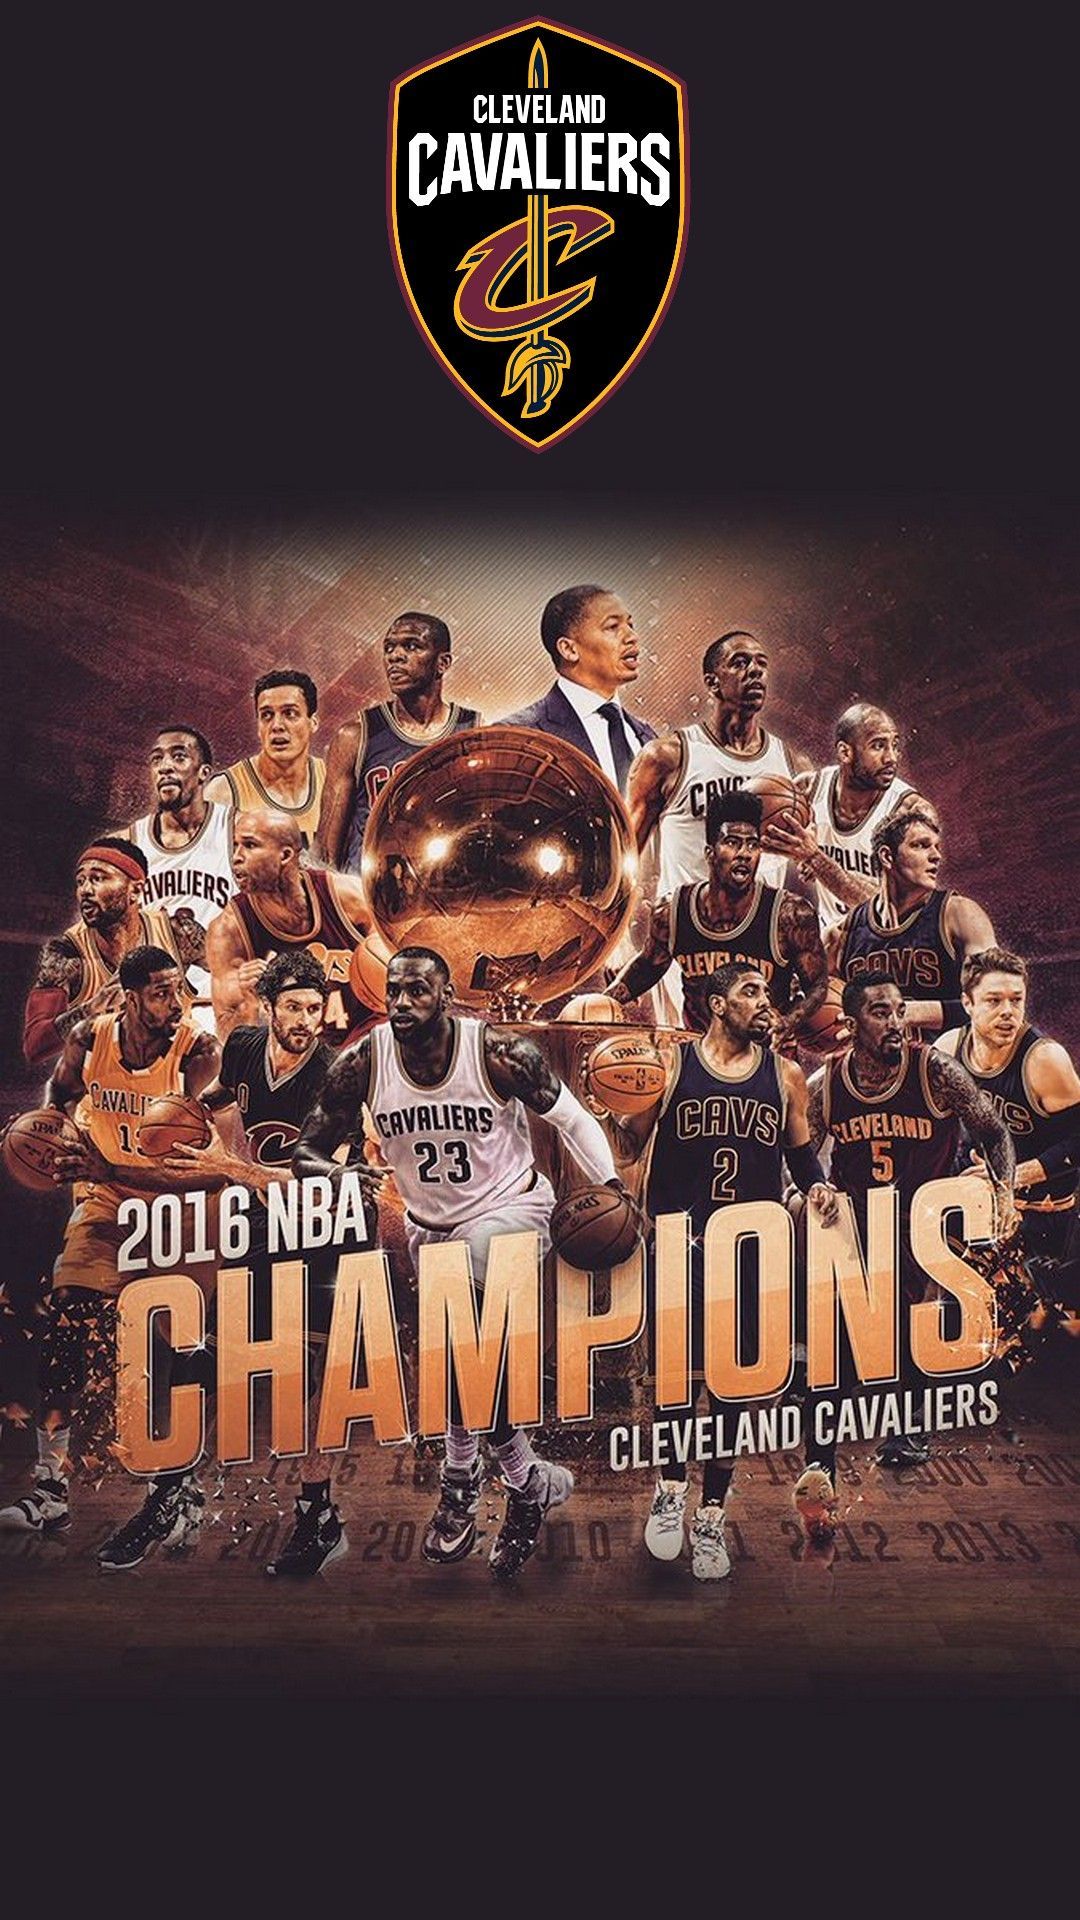 Cleveland Cavaliers NBA Wallpaper Mobile. Cavaliers wallpaper